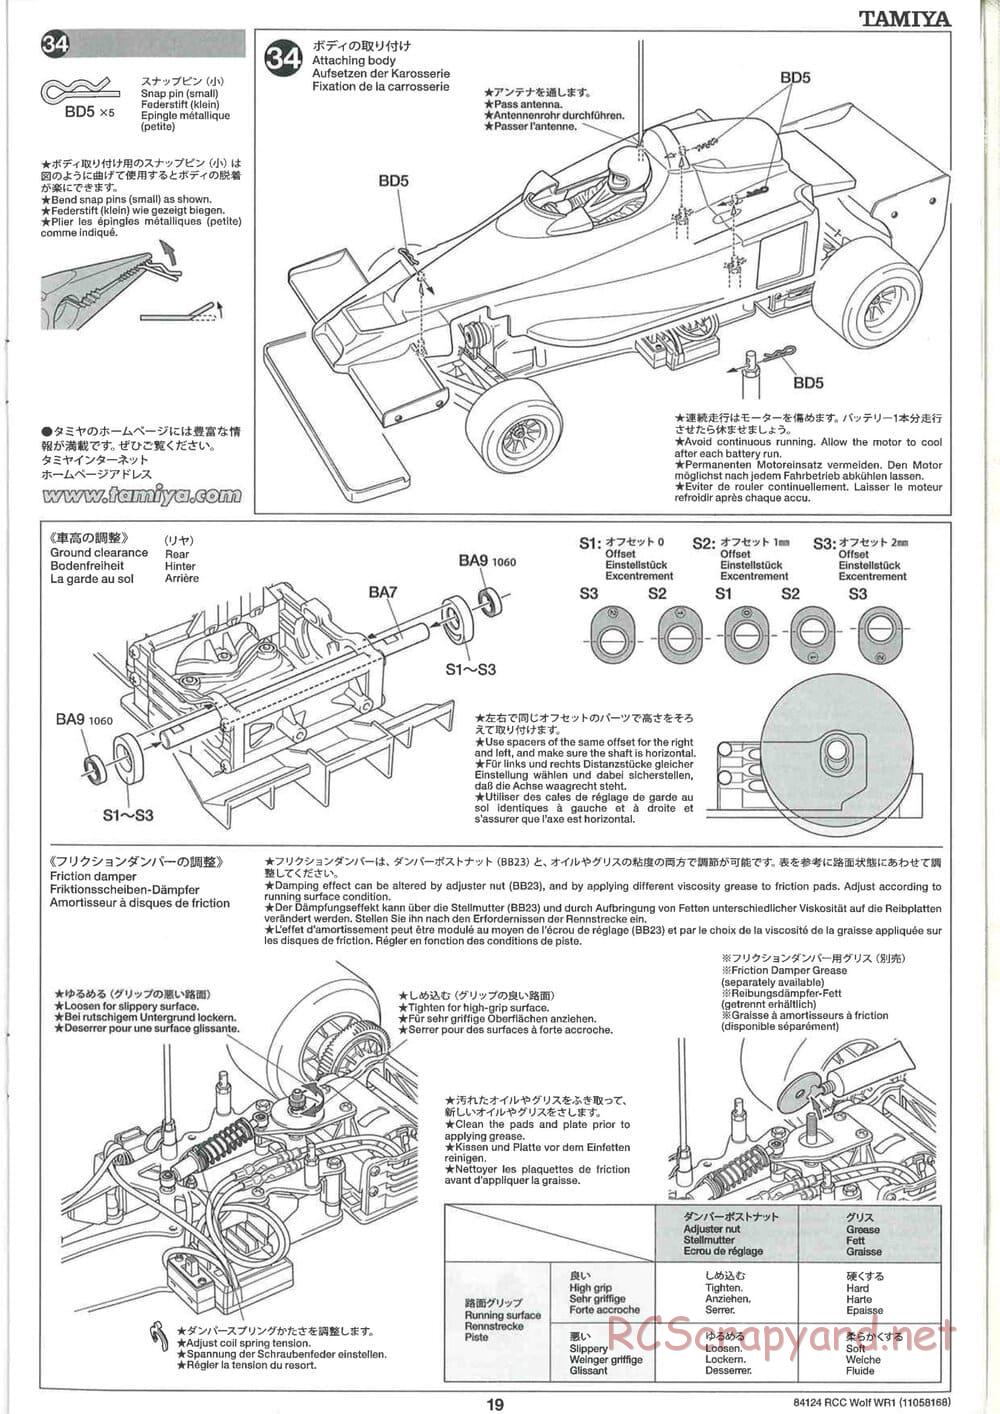 Tamiya - Wolf WR1 - F104W Chassis - Manual - Page 19